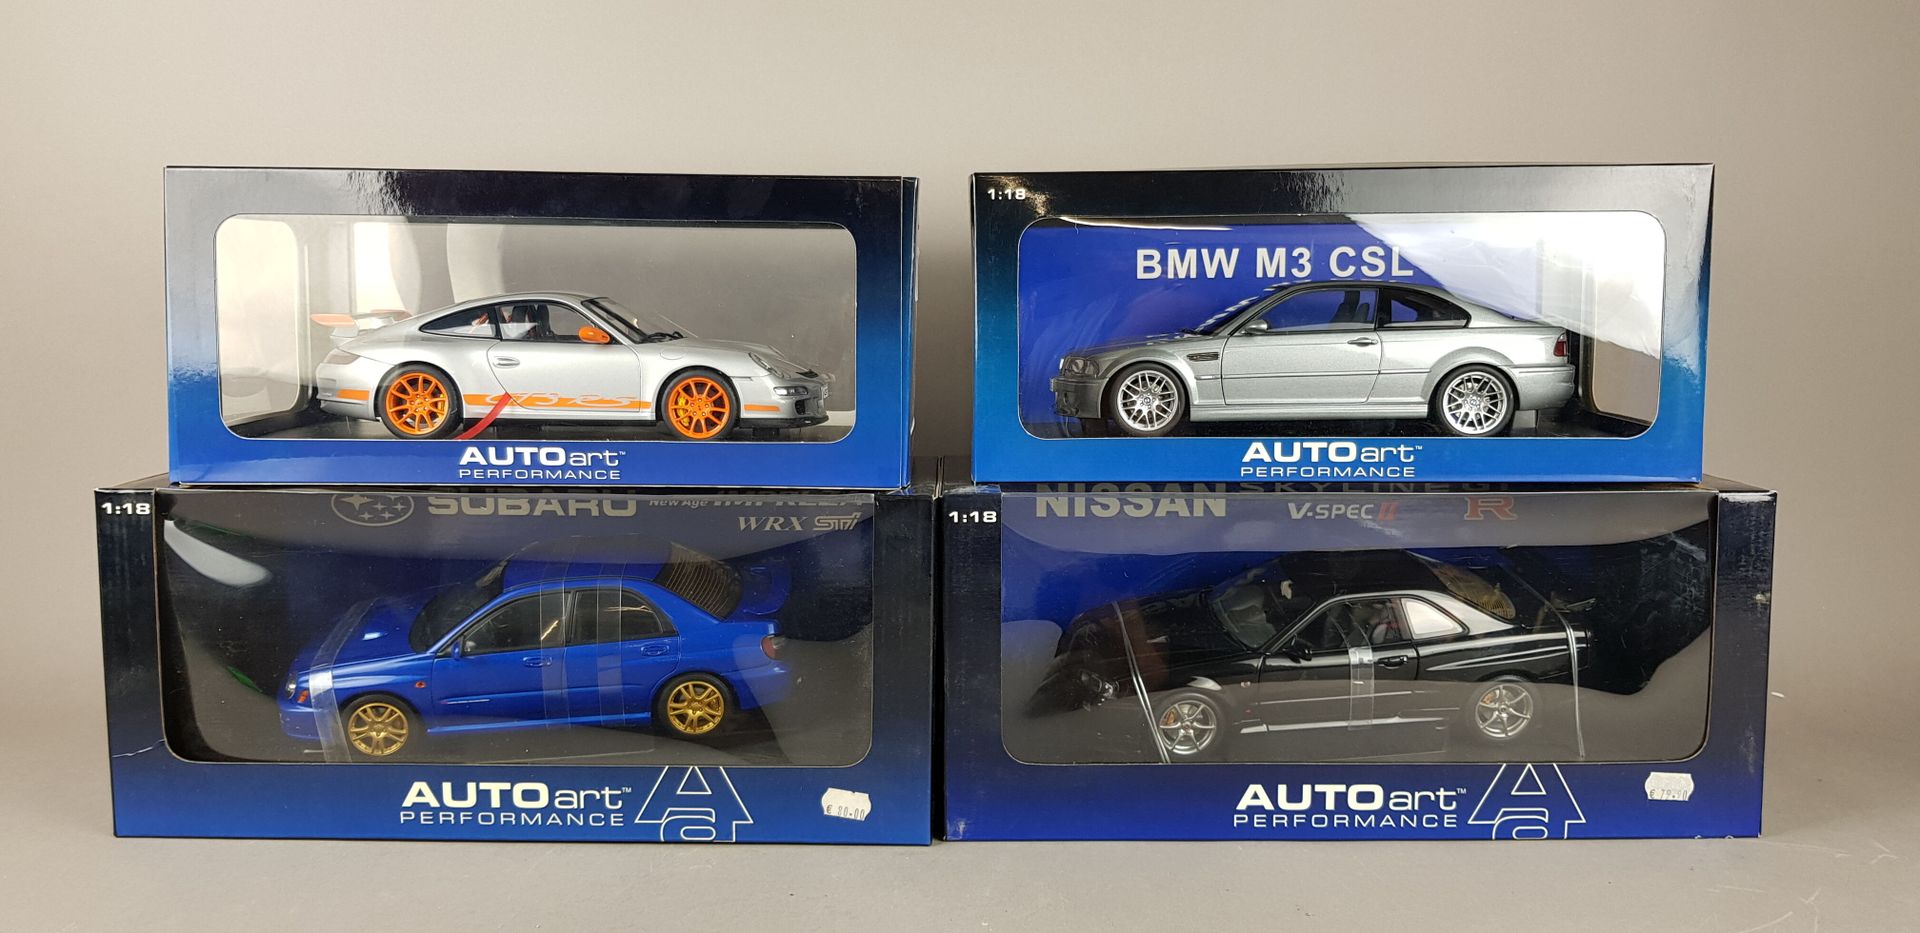 Null AUTO-ART - QUATRE voitures échelle 1/18 :

1x BMW M3 CSL

1x Porsche 997 GT&hellip;